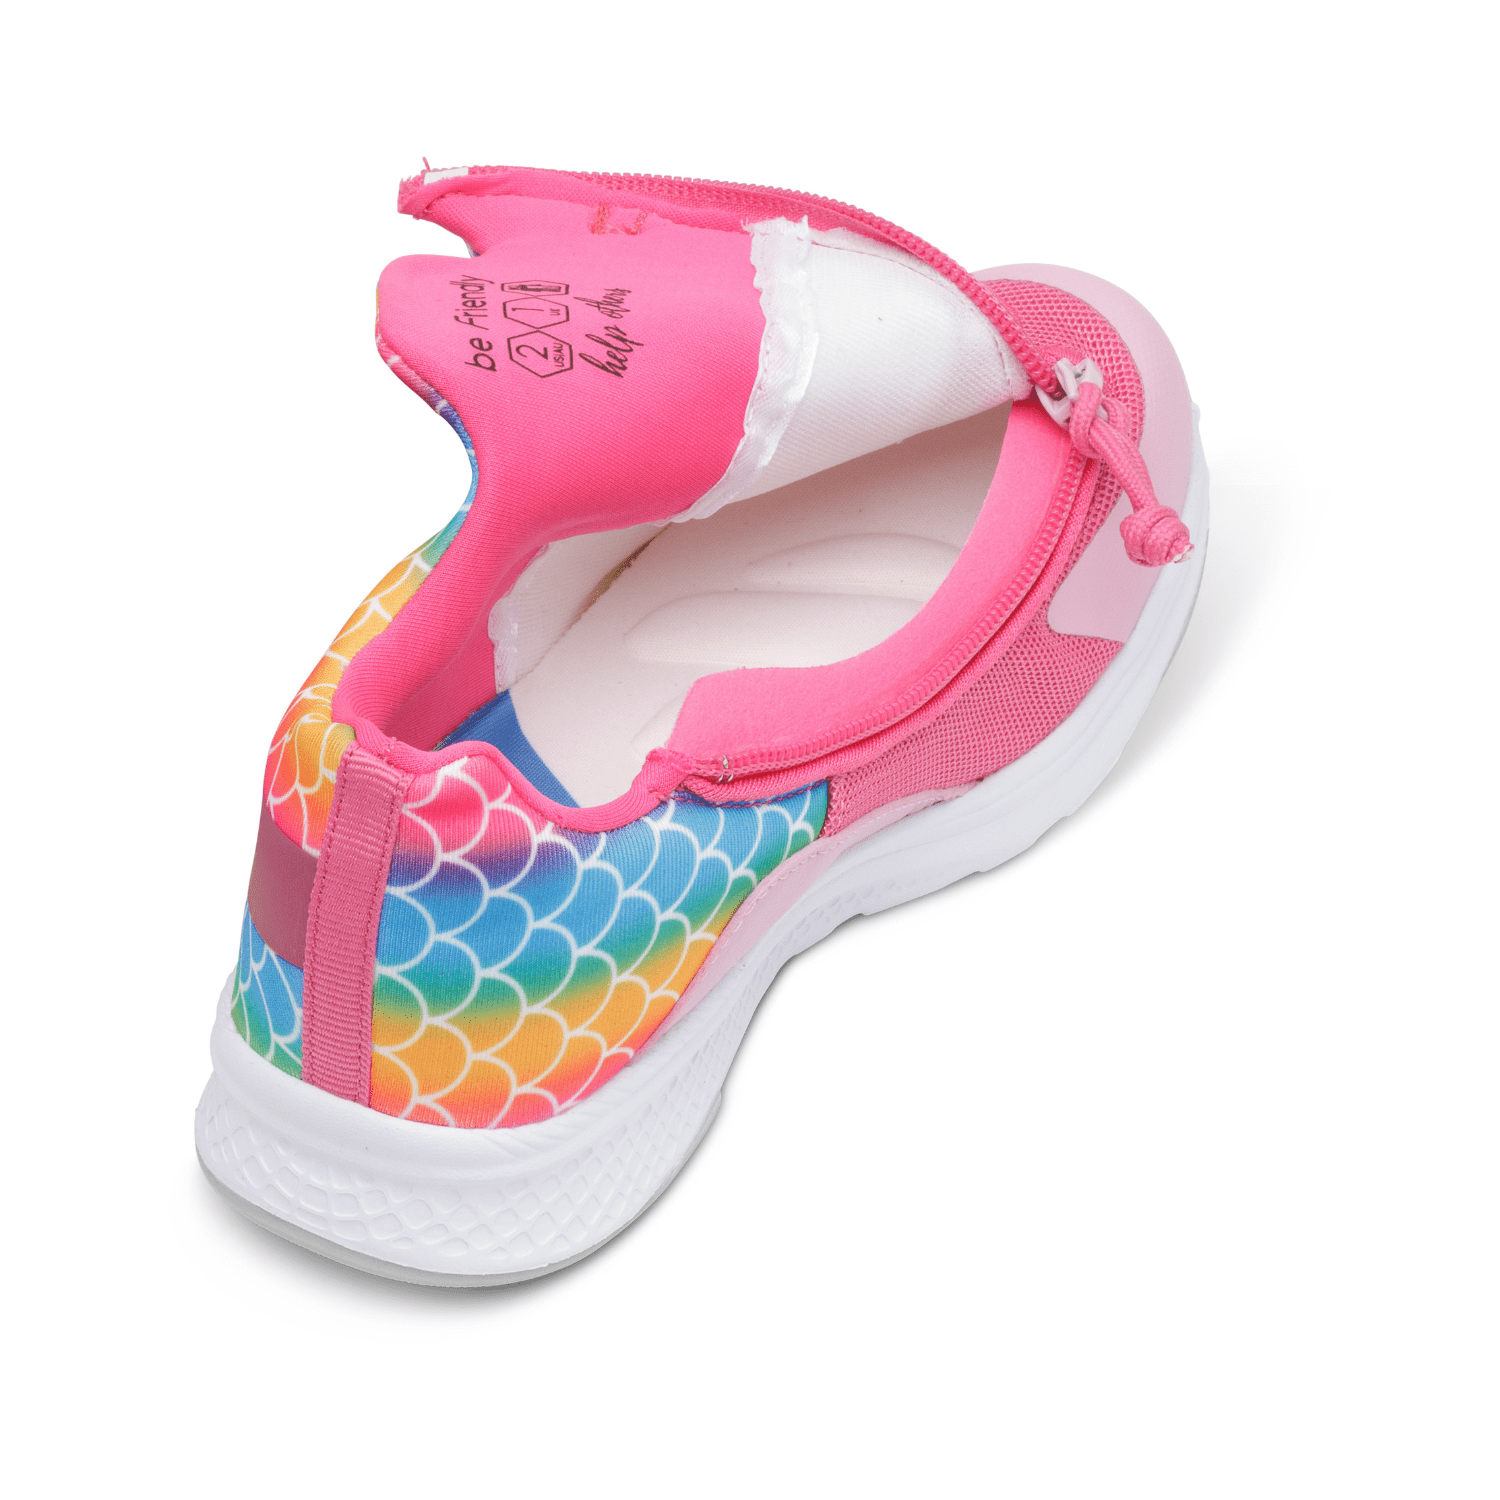 kryds aspekt nikotin Kid's Quest Mermaid - Friendly Shoes - The Shoe for All Abilities